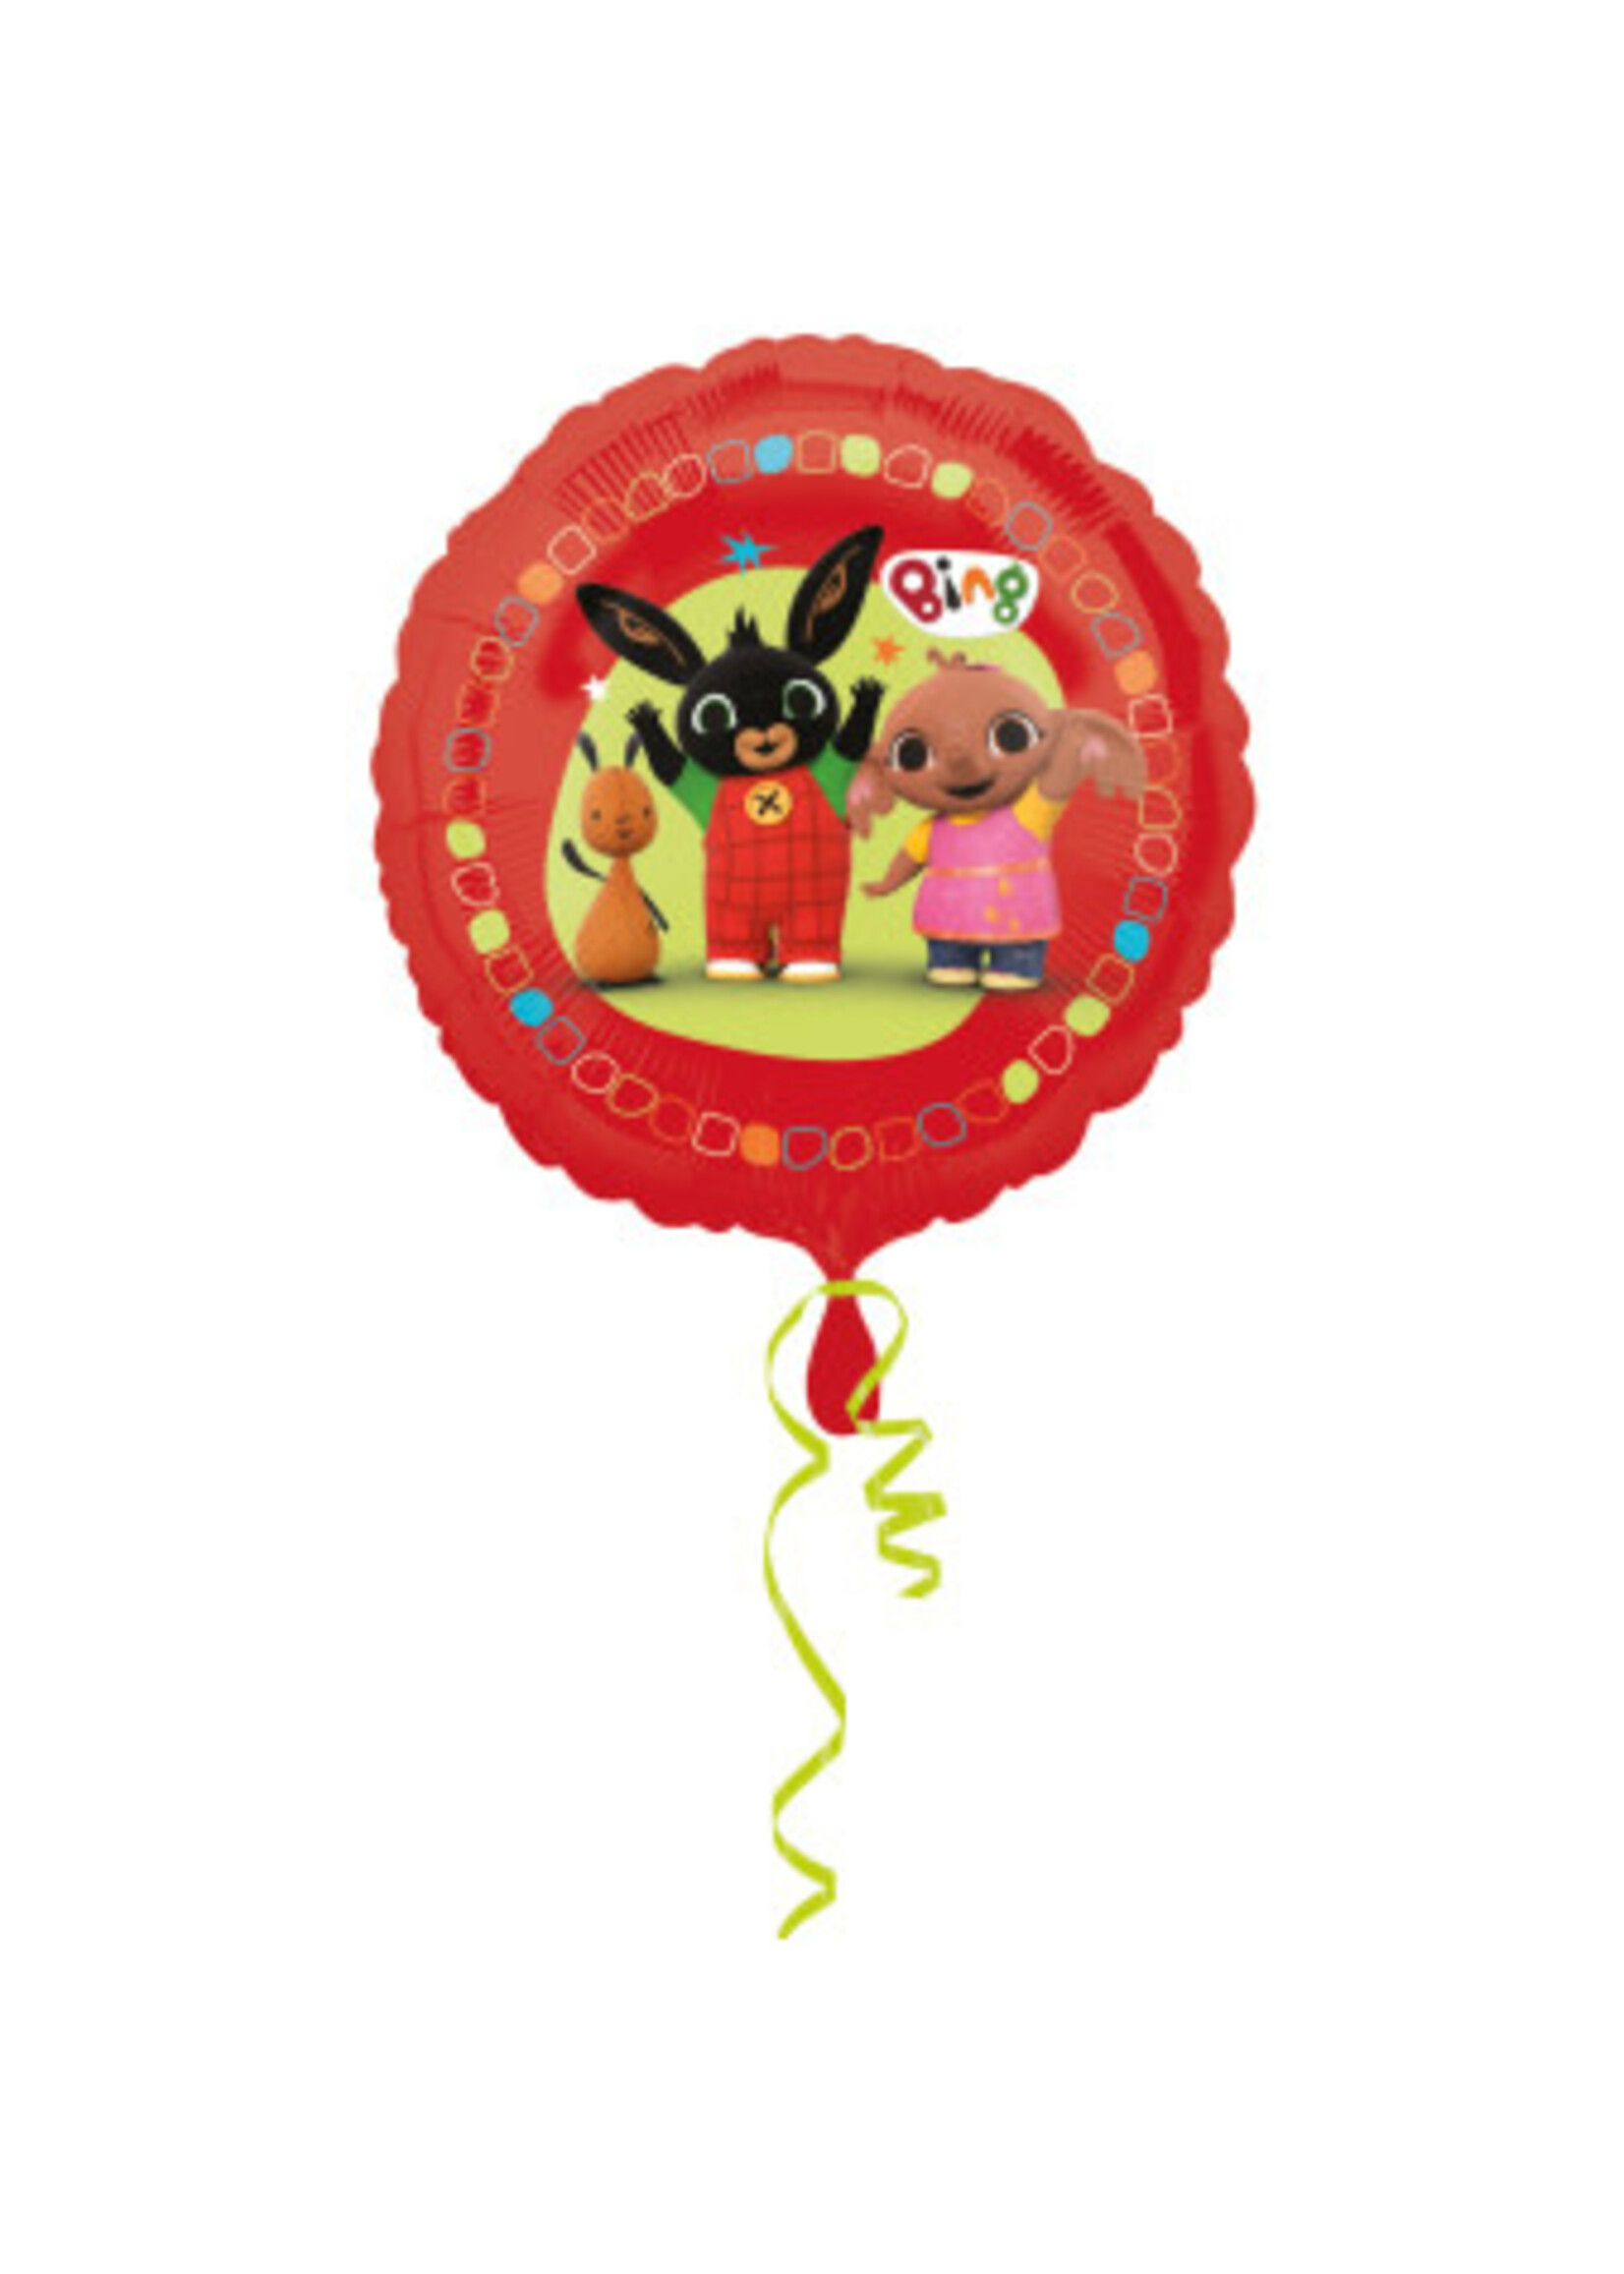 Bing Standard Bing Folie Ballon 43 cm